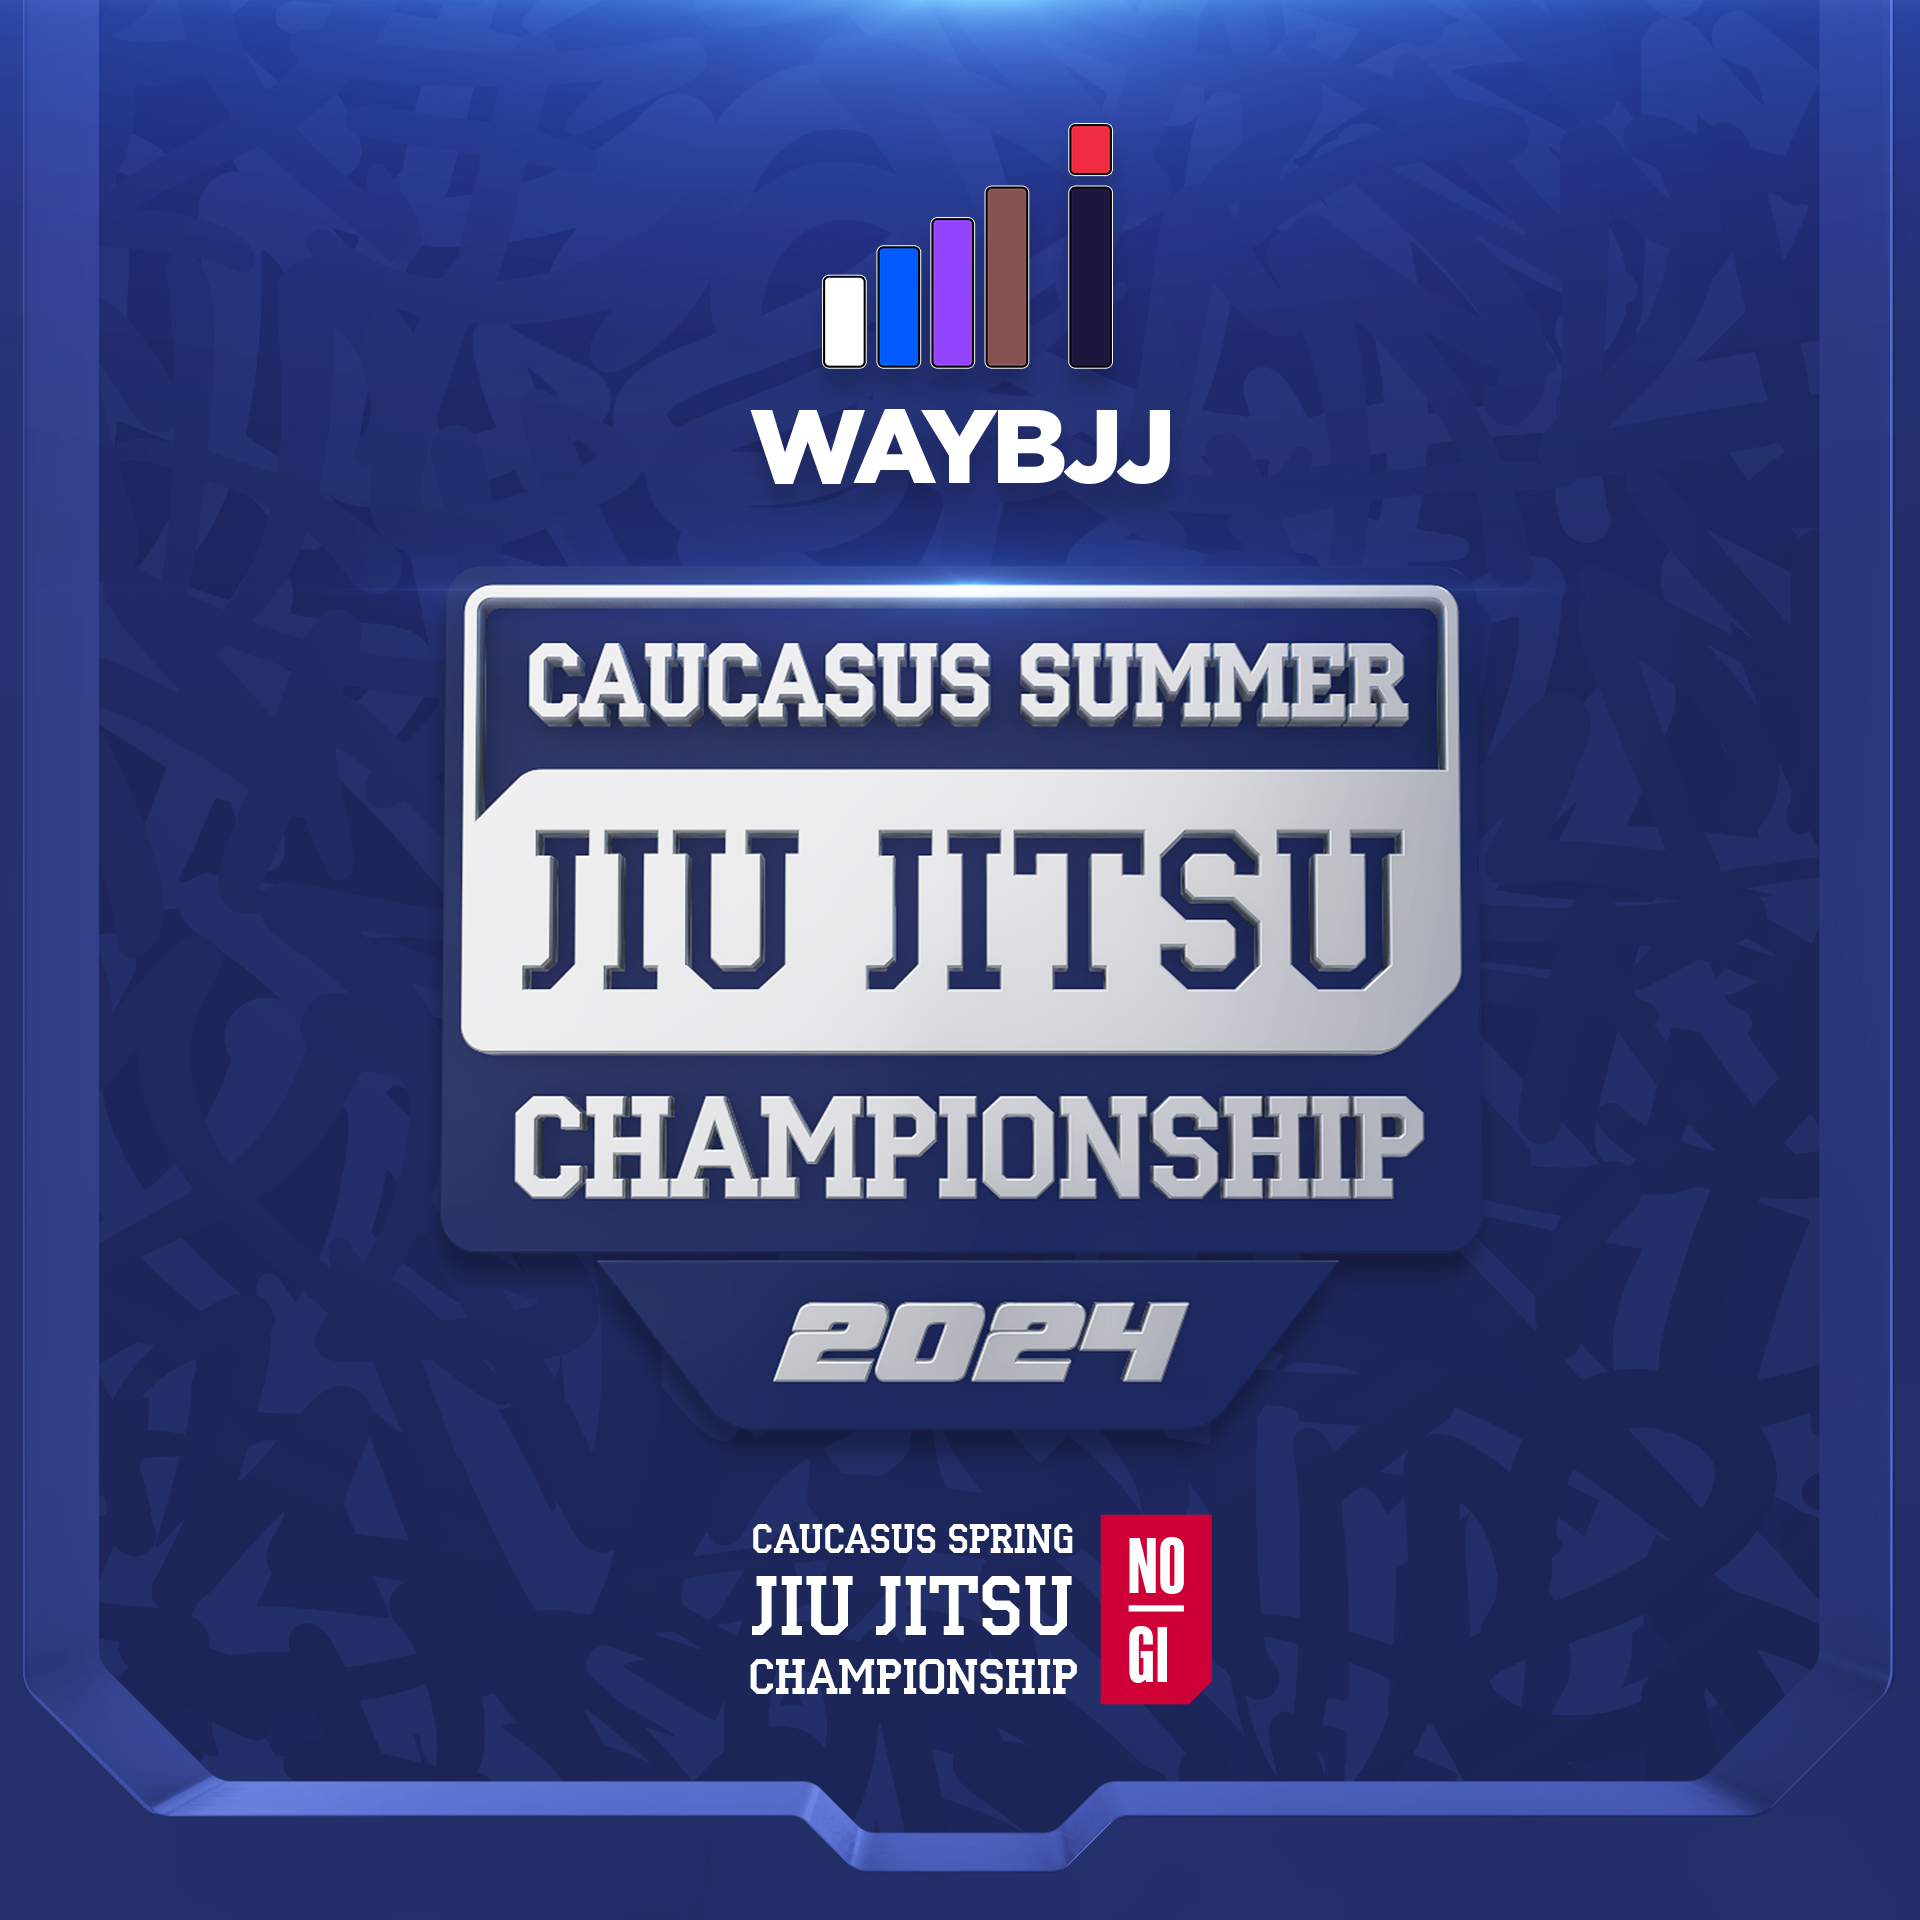 WAYBJJ CAUCASUS SUMMER JIU-JITSU CHAMPIONSHIP DAY-2